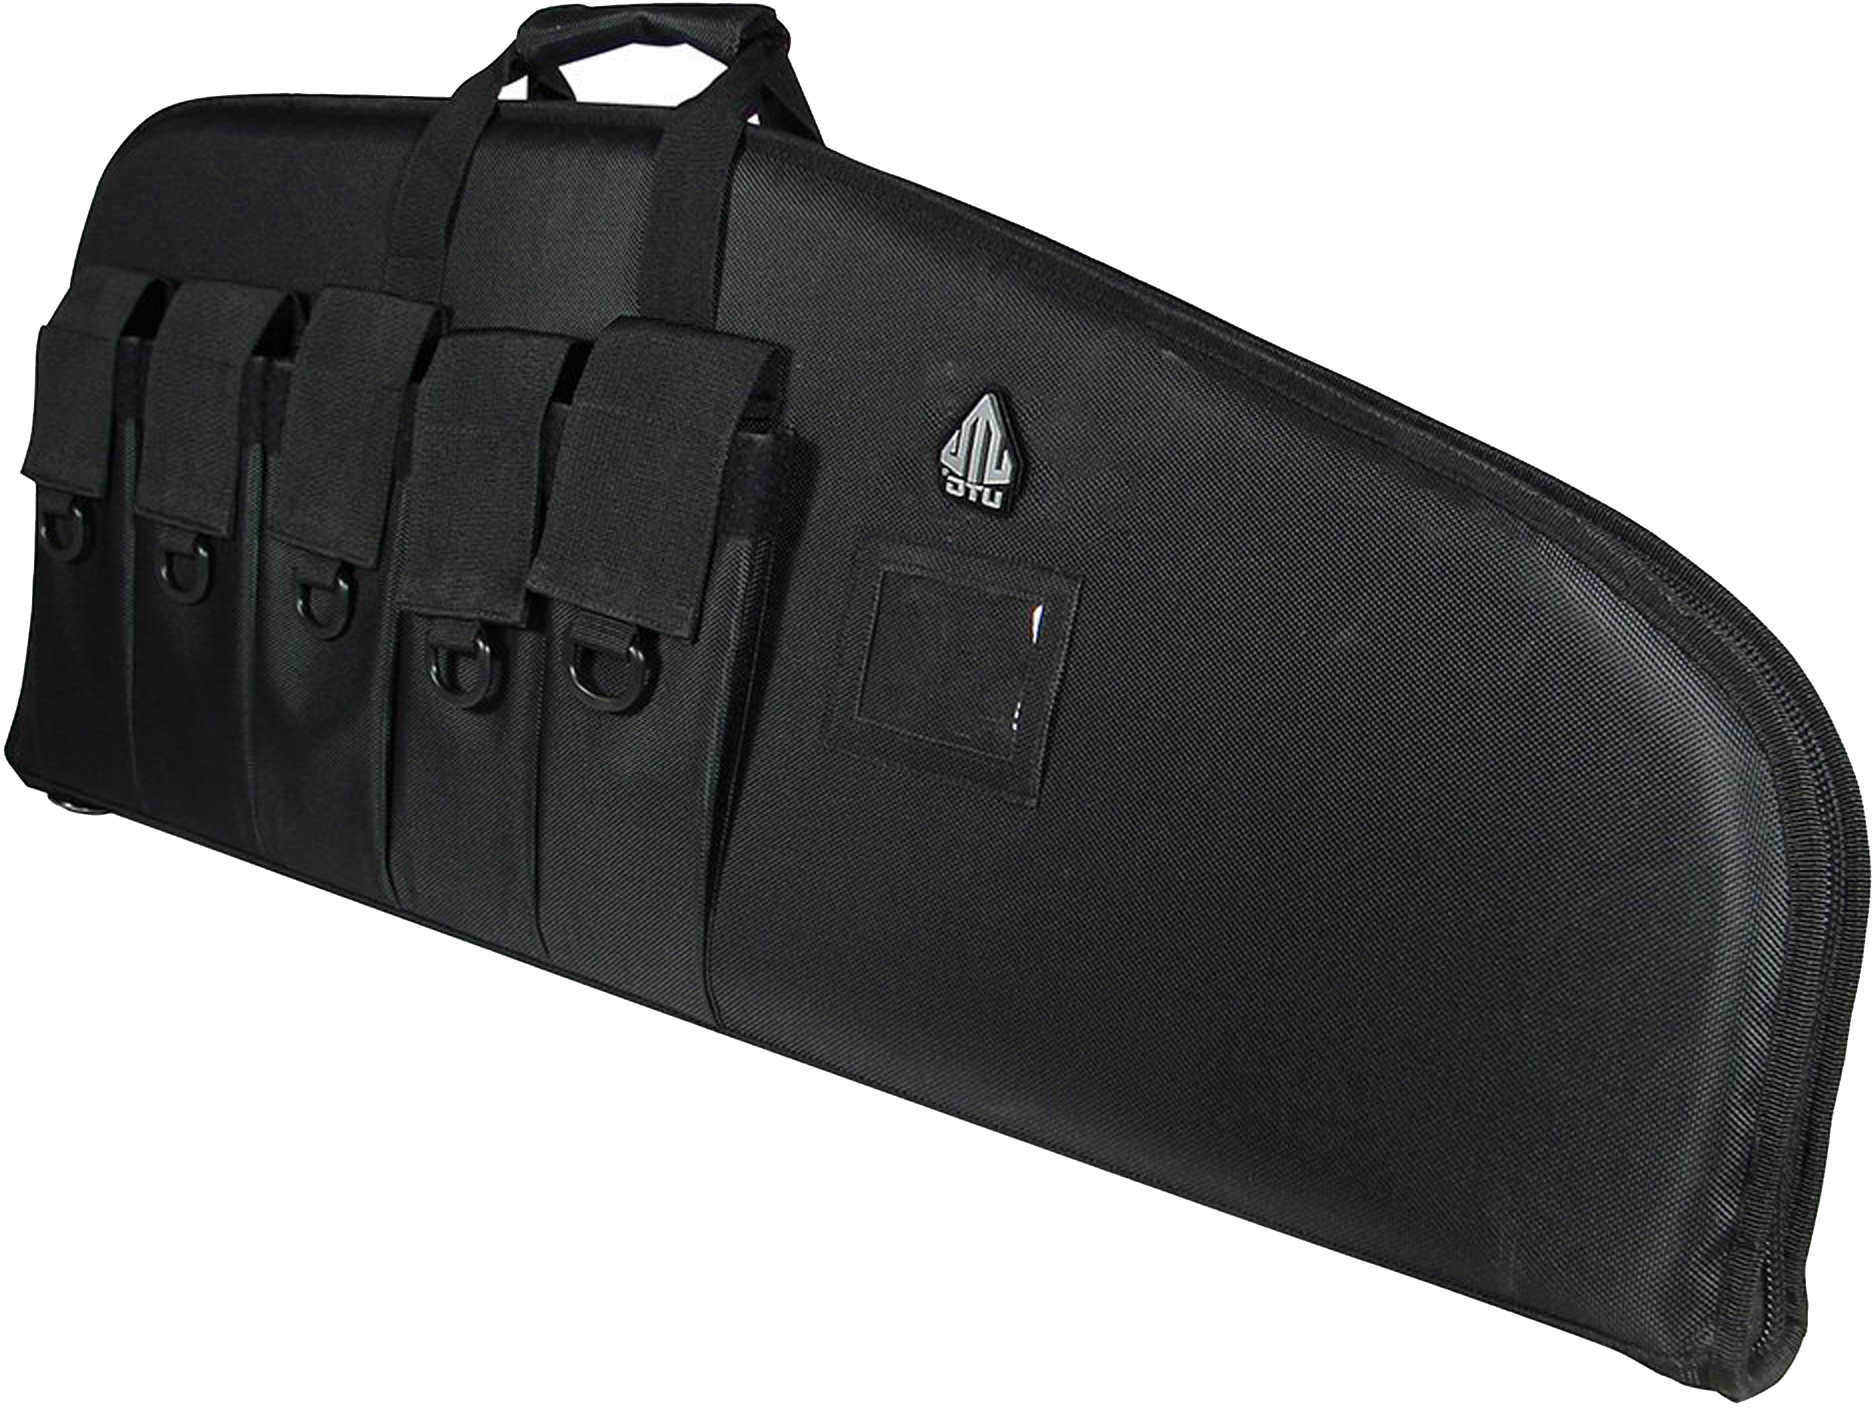 Leapers UTG Gun Case 34" Black Dc Tactical